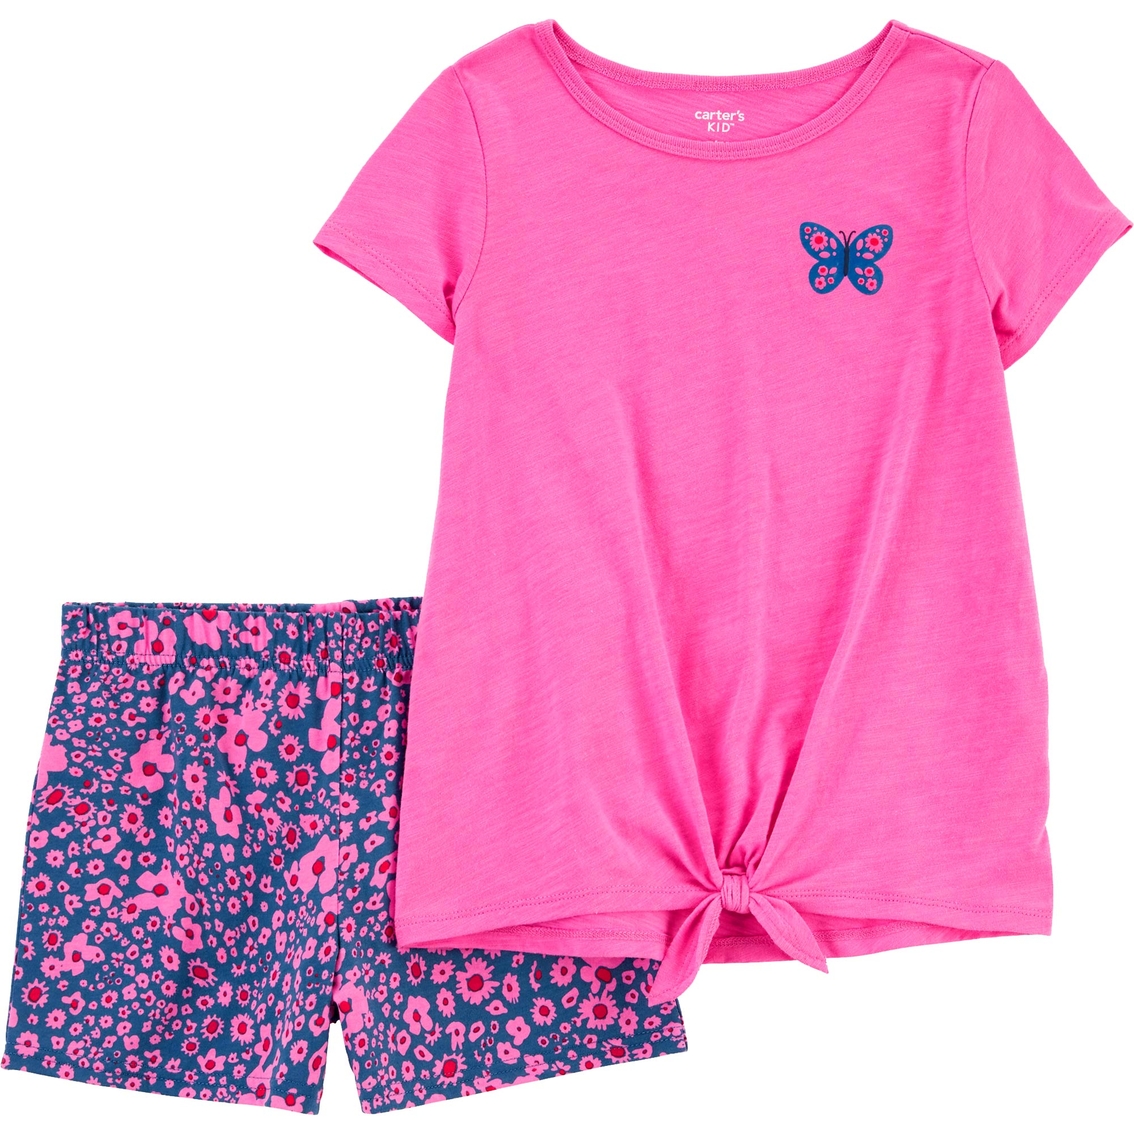 Carter's Little Girls Butterfly Tee And Shorts 2 Pc. Set | Girls 4-6x ...